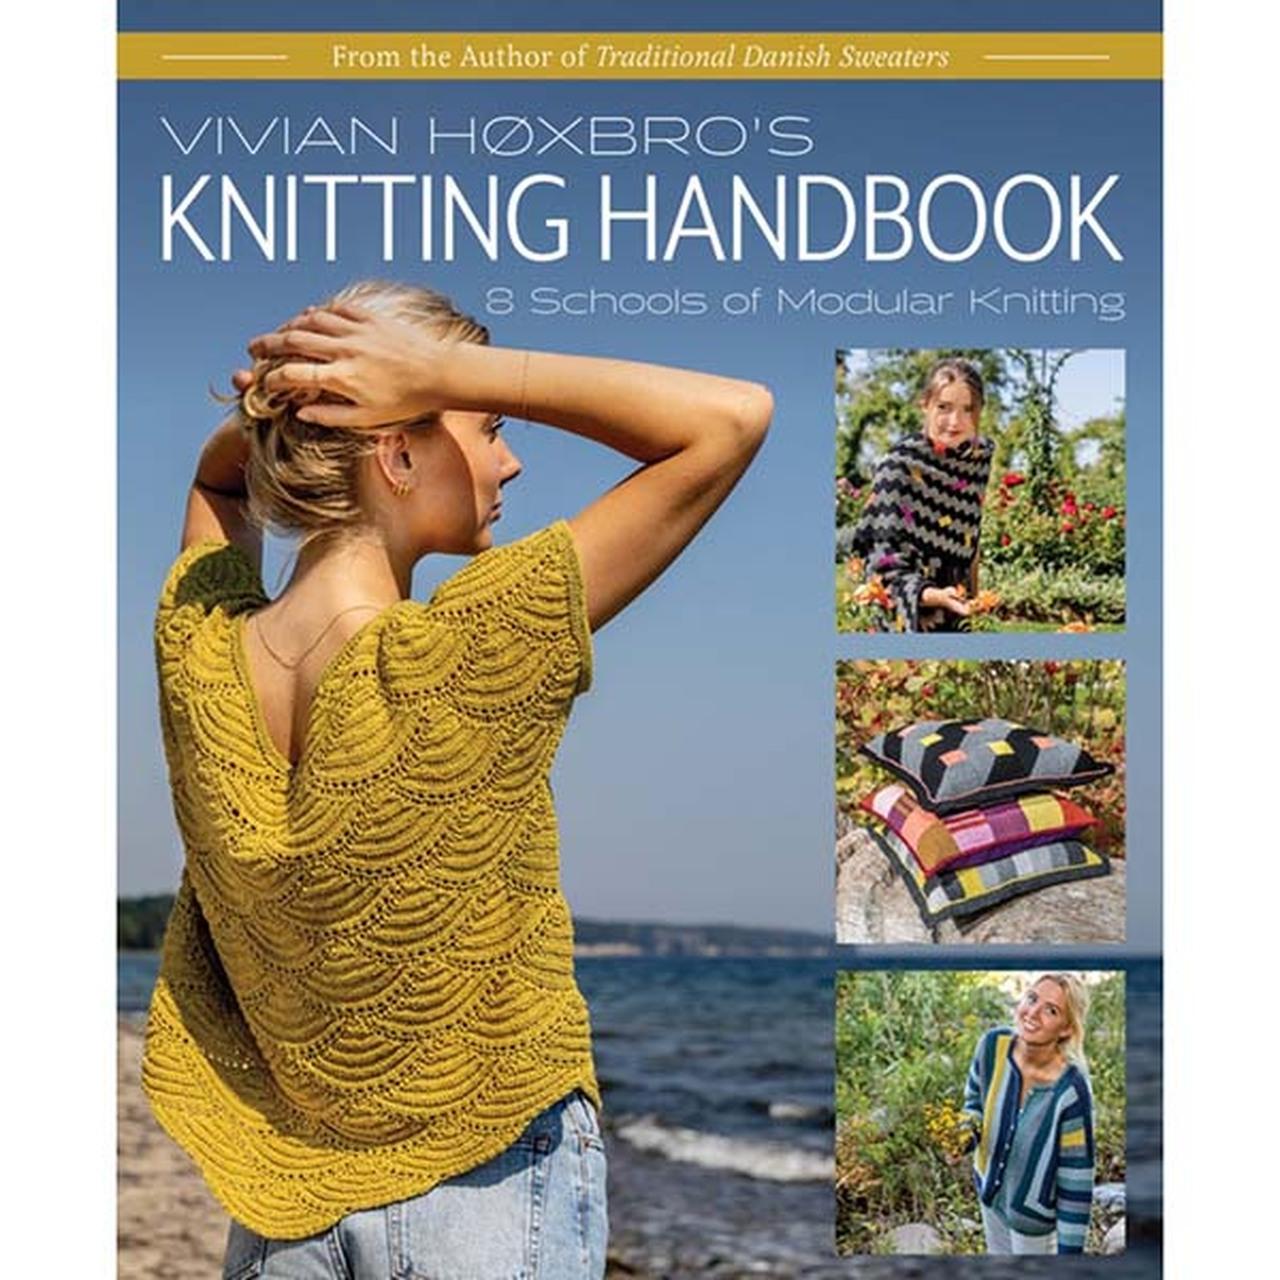 Vivian Hoxbro's Knitting Handook- 8 Schools of Modular Knitting